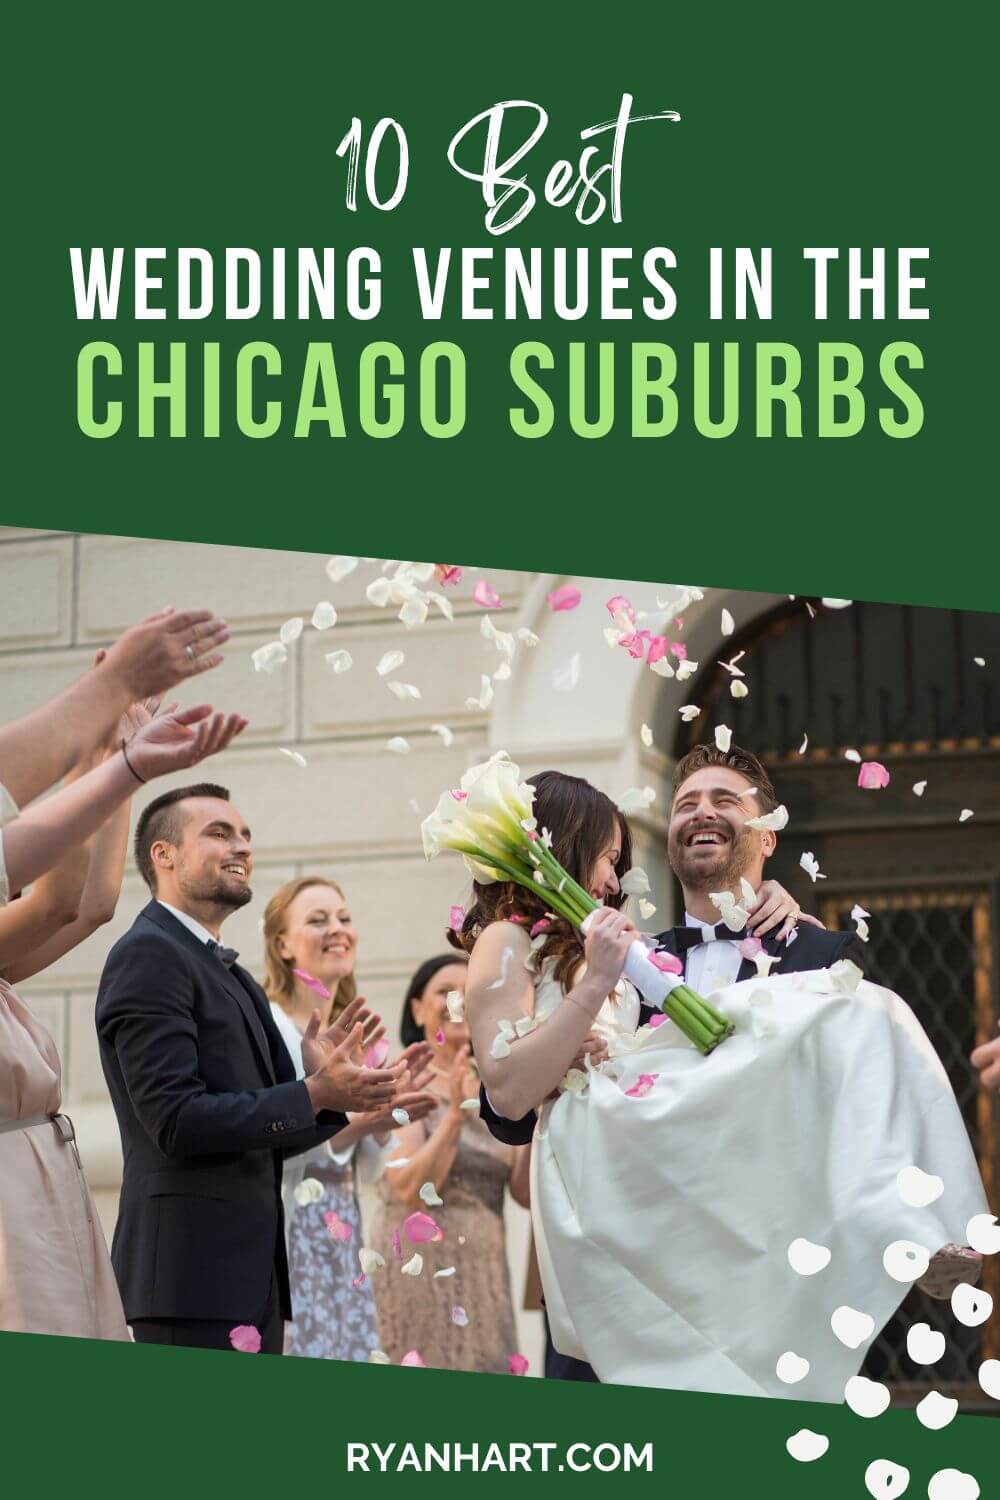 Wedding reception space near Chicago